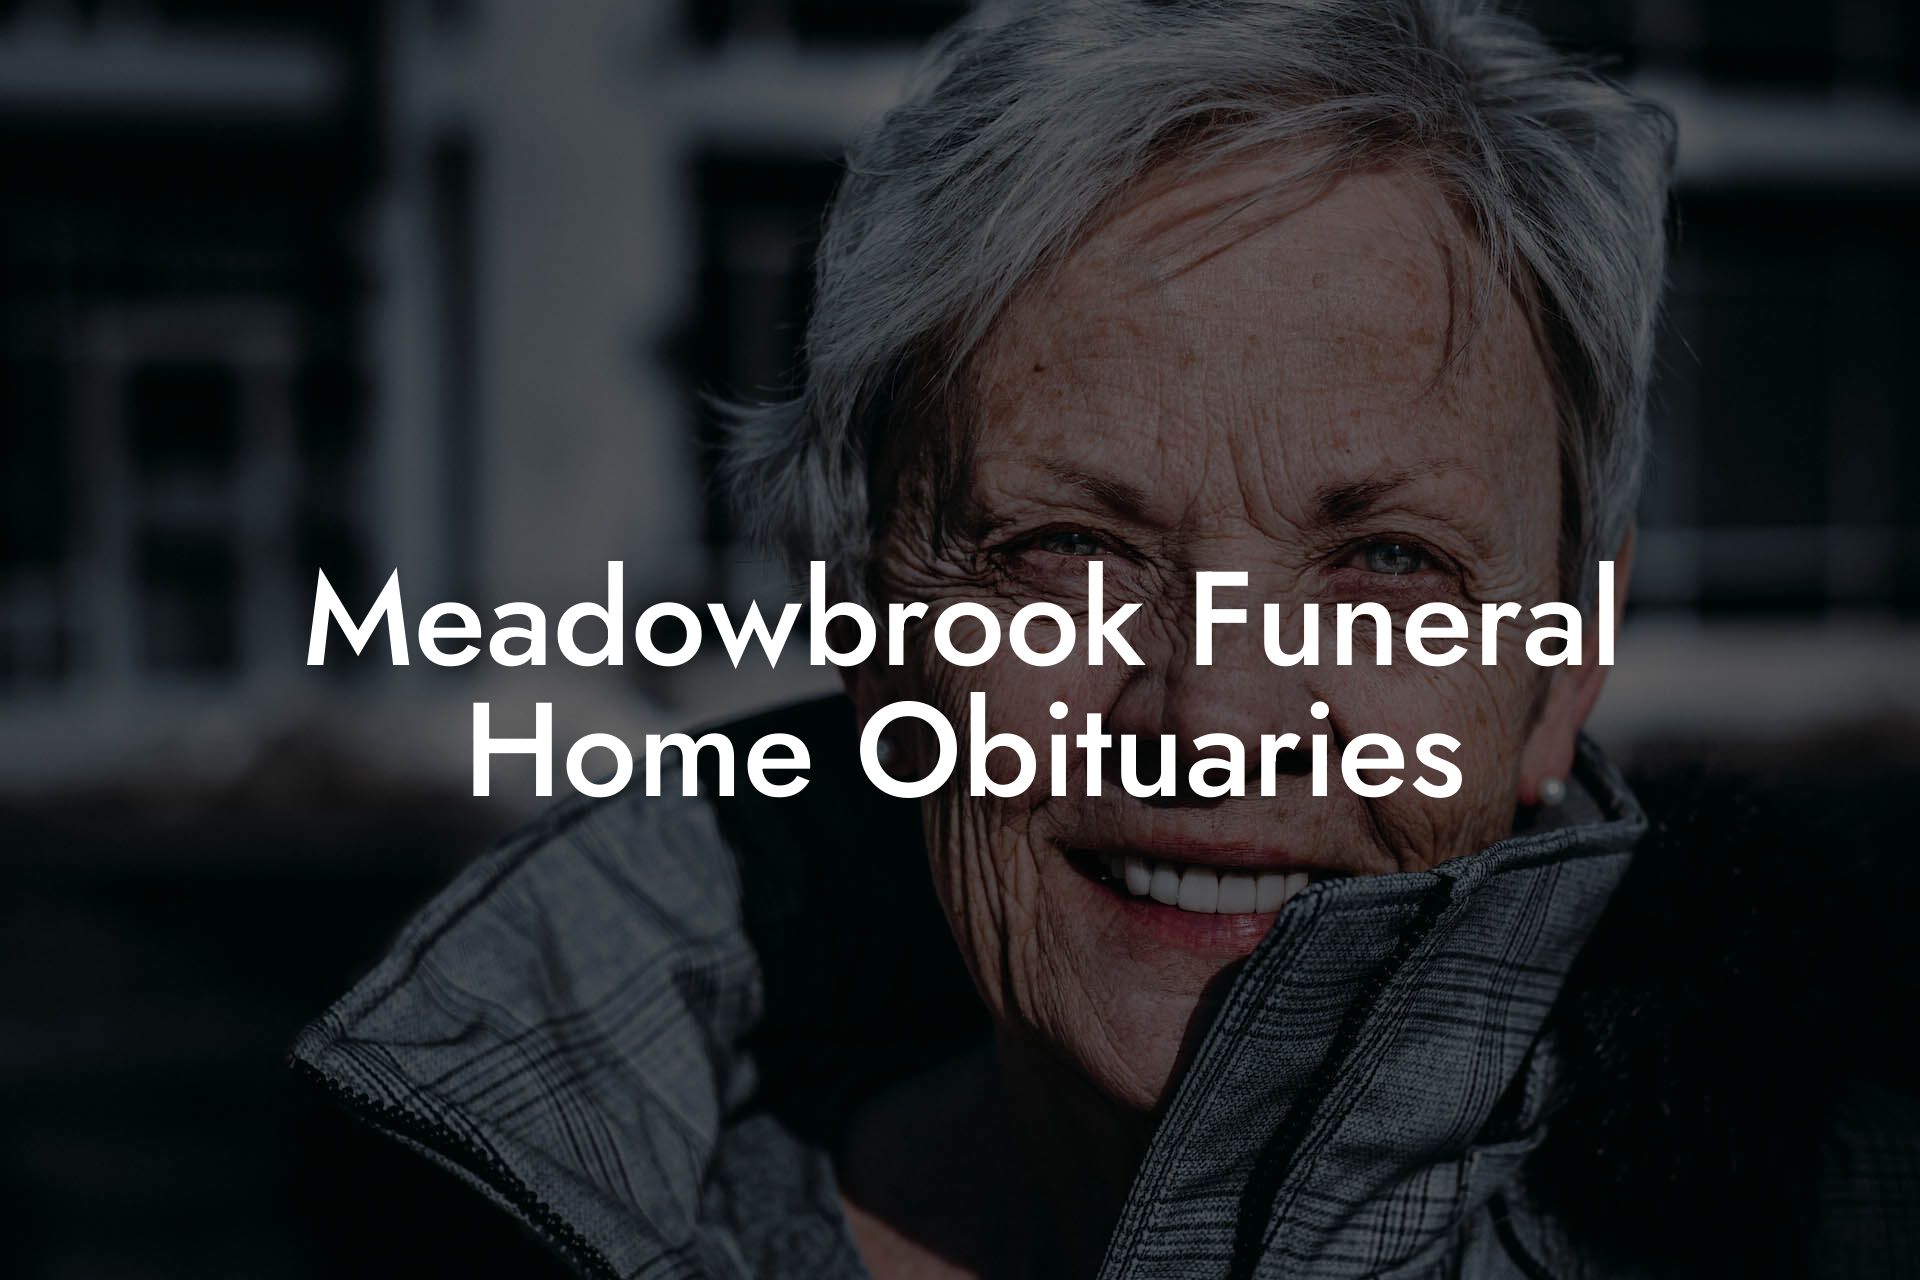 Meadowbrook Funeral Home Obituaries